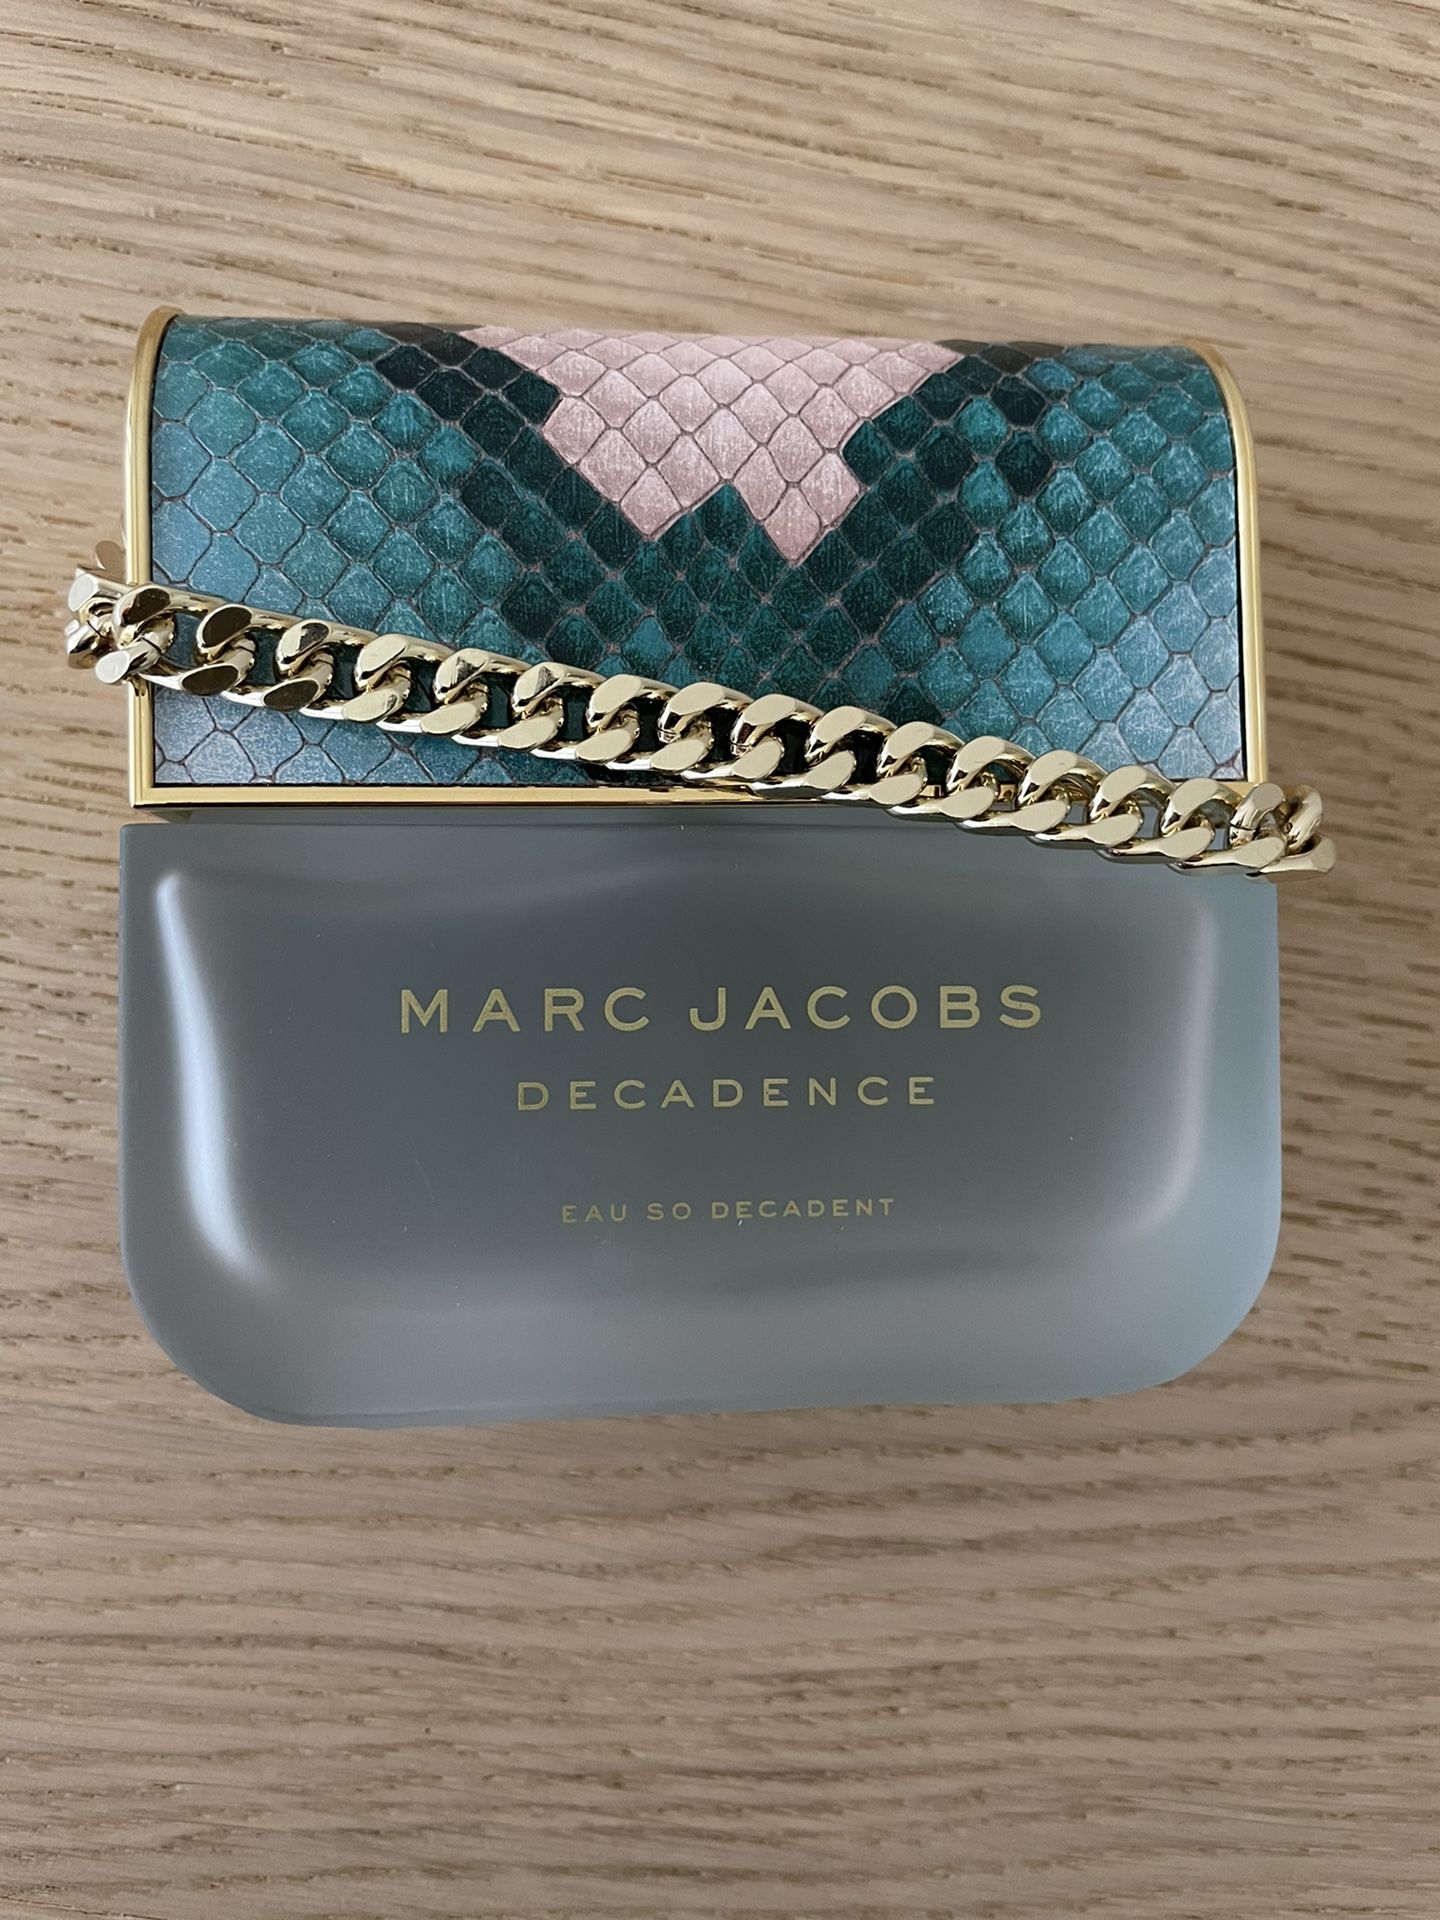 NEW Authentic Marc Jacobs Perfume  